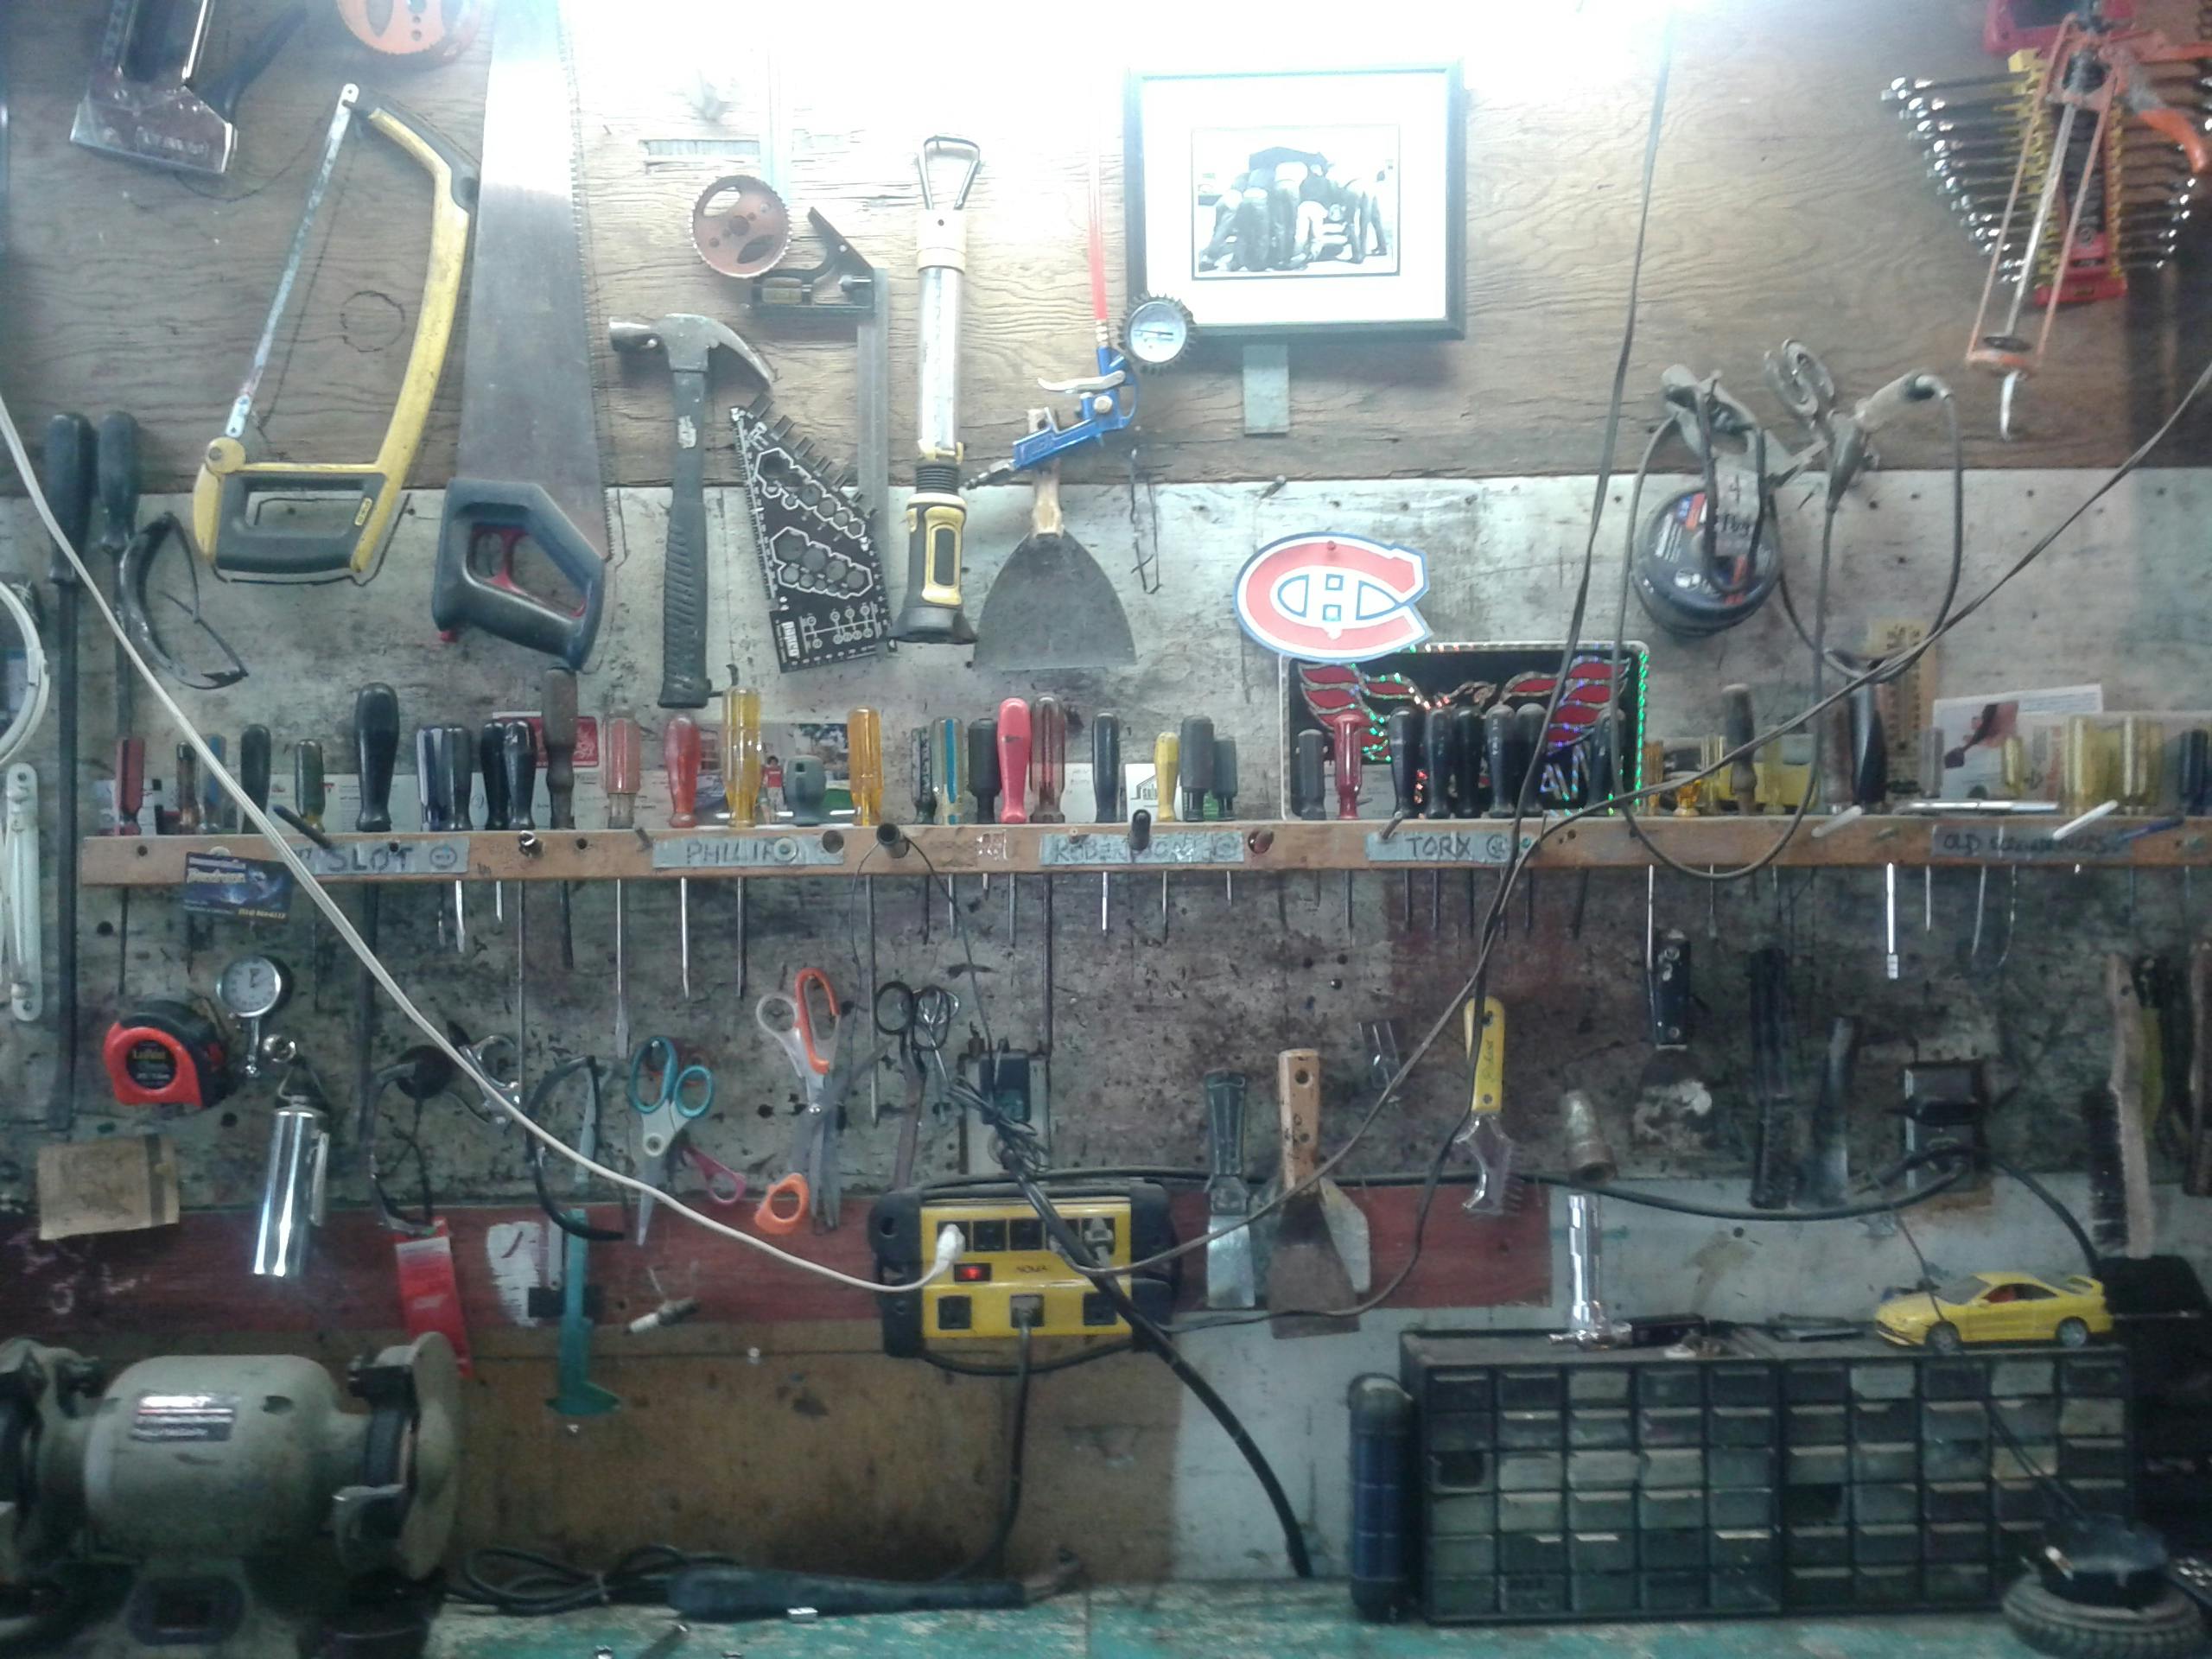 Free stock photo of garage, tools